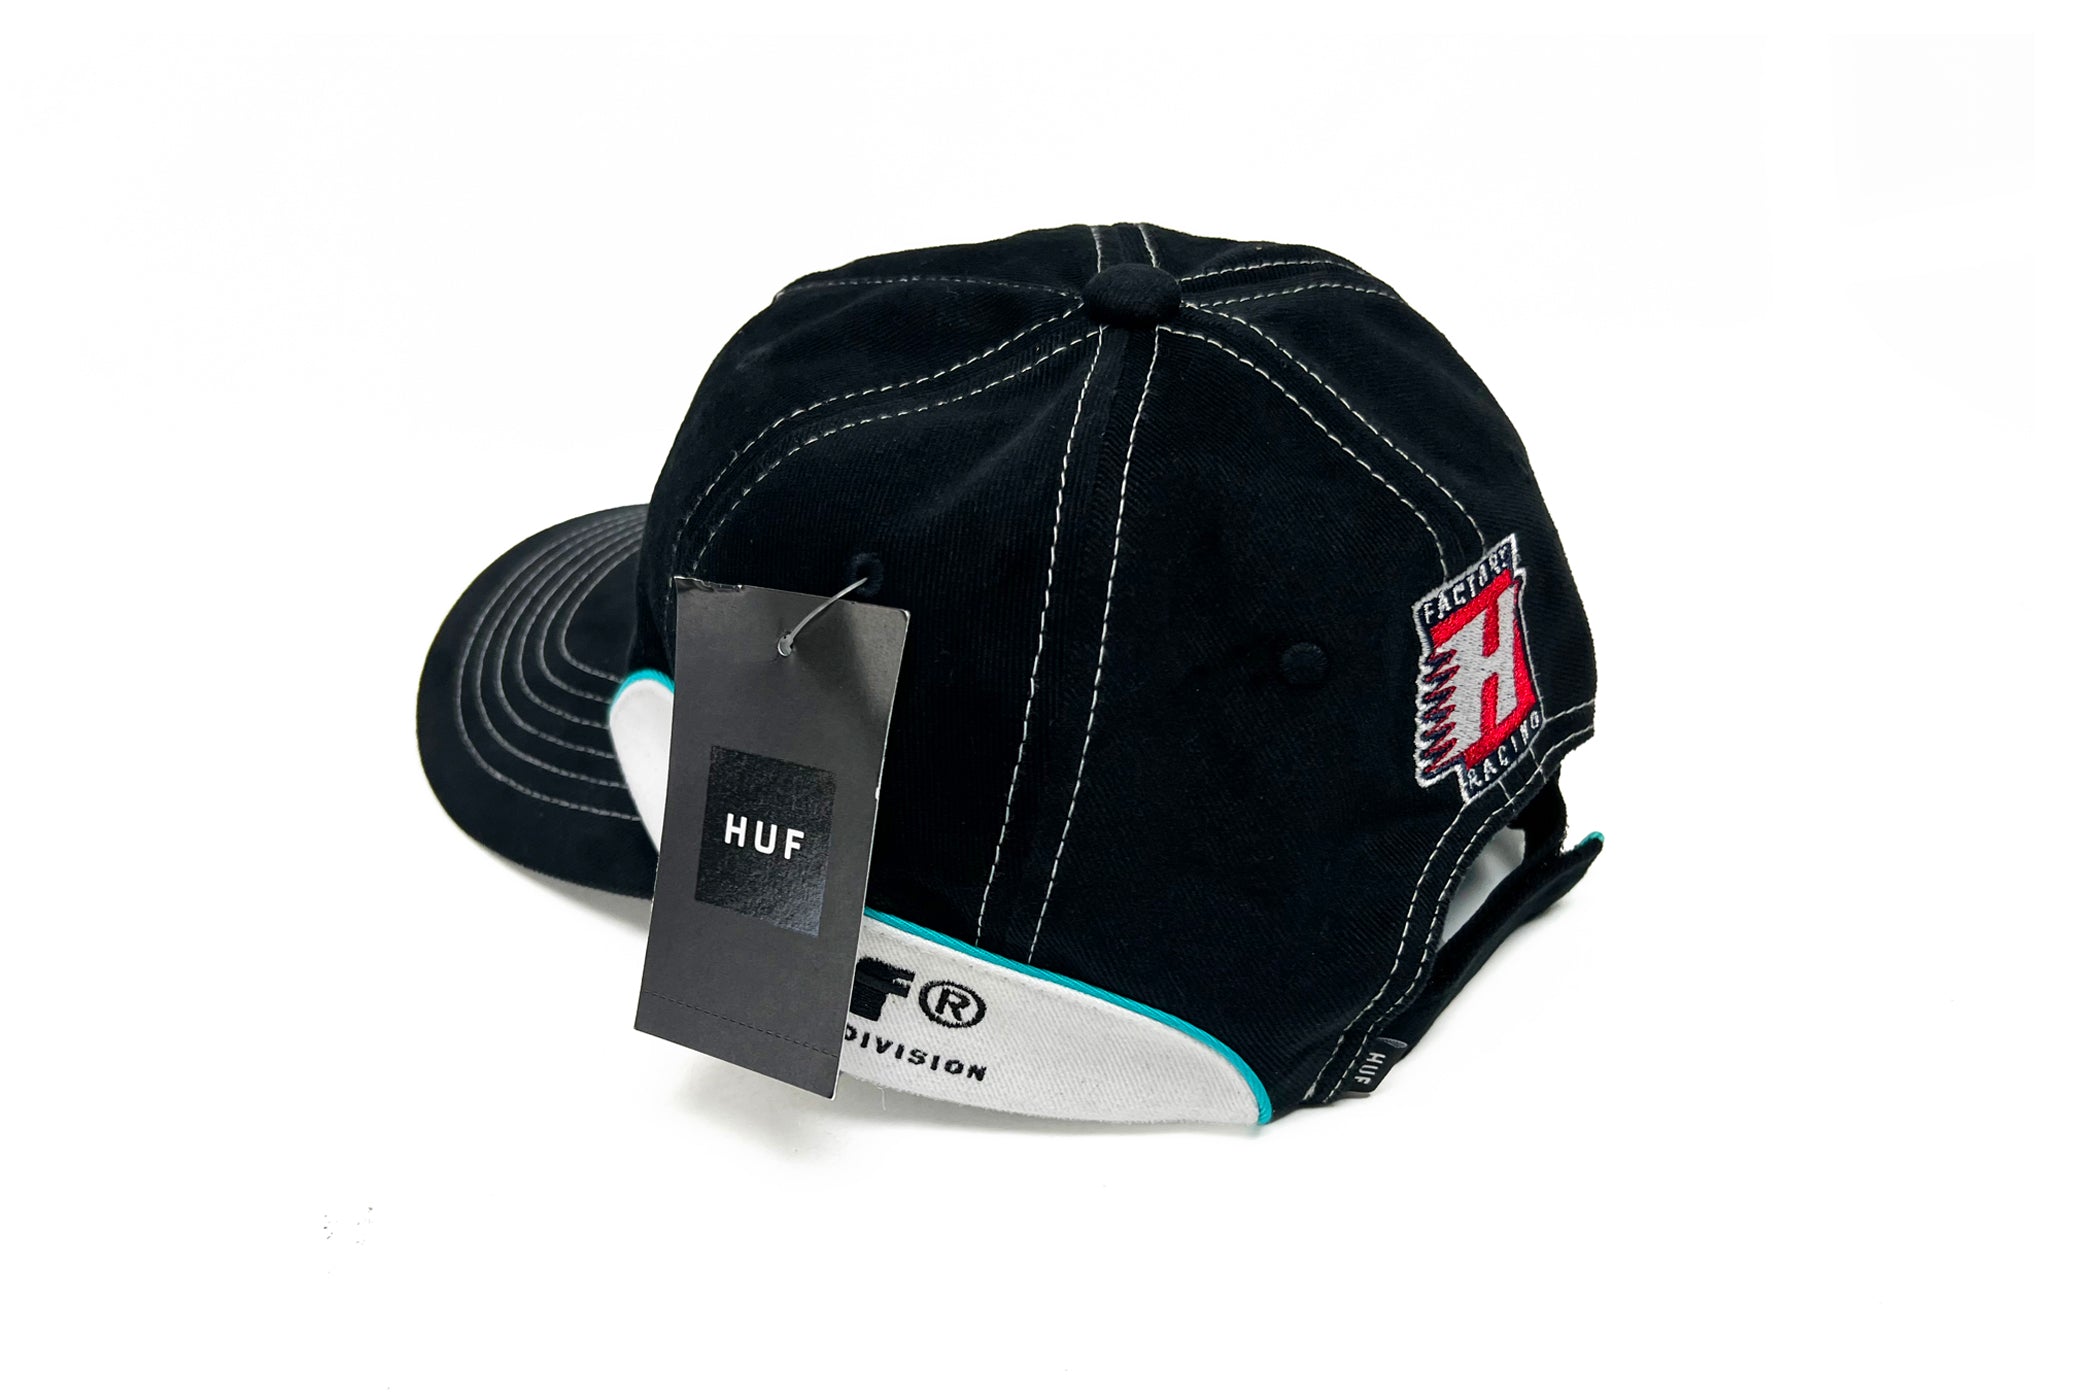 HUF x GReddy Racing Team Hat - Black